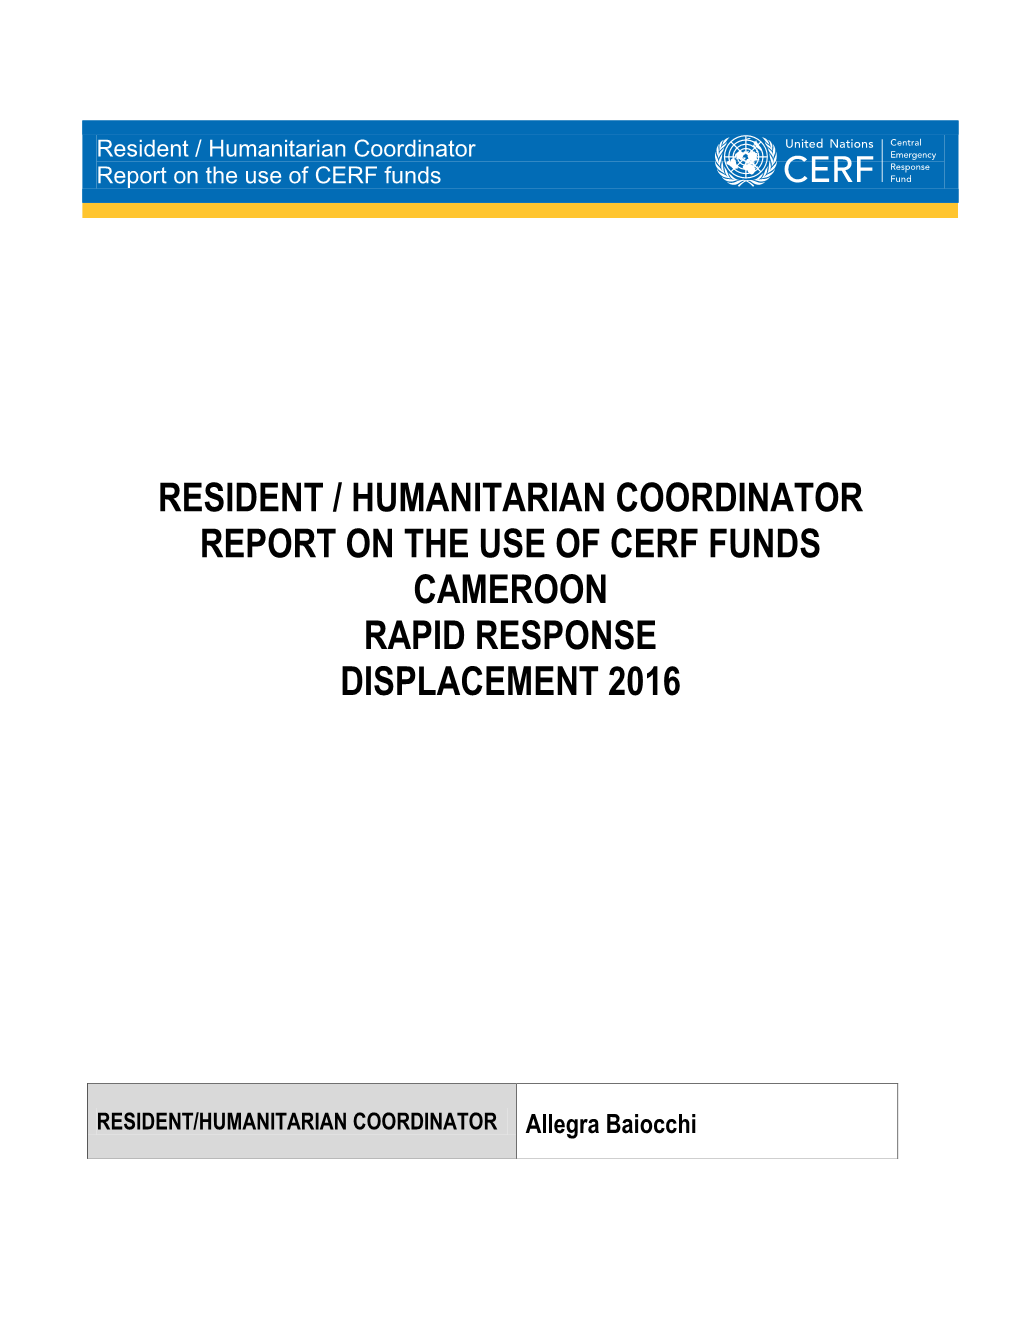 Cameroon Rapid Response Displacement 2016